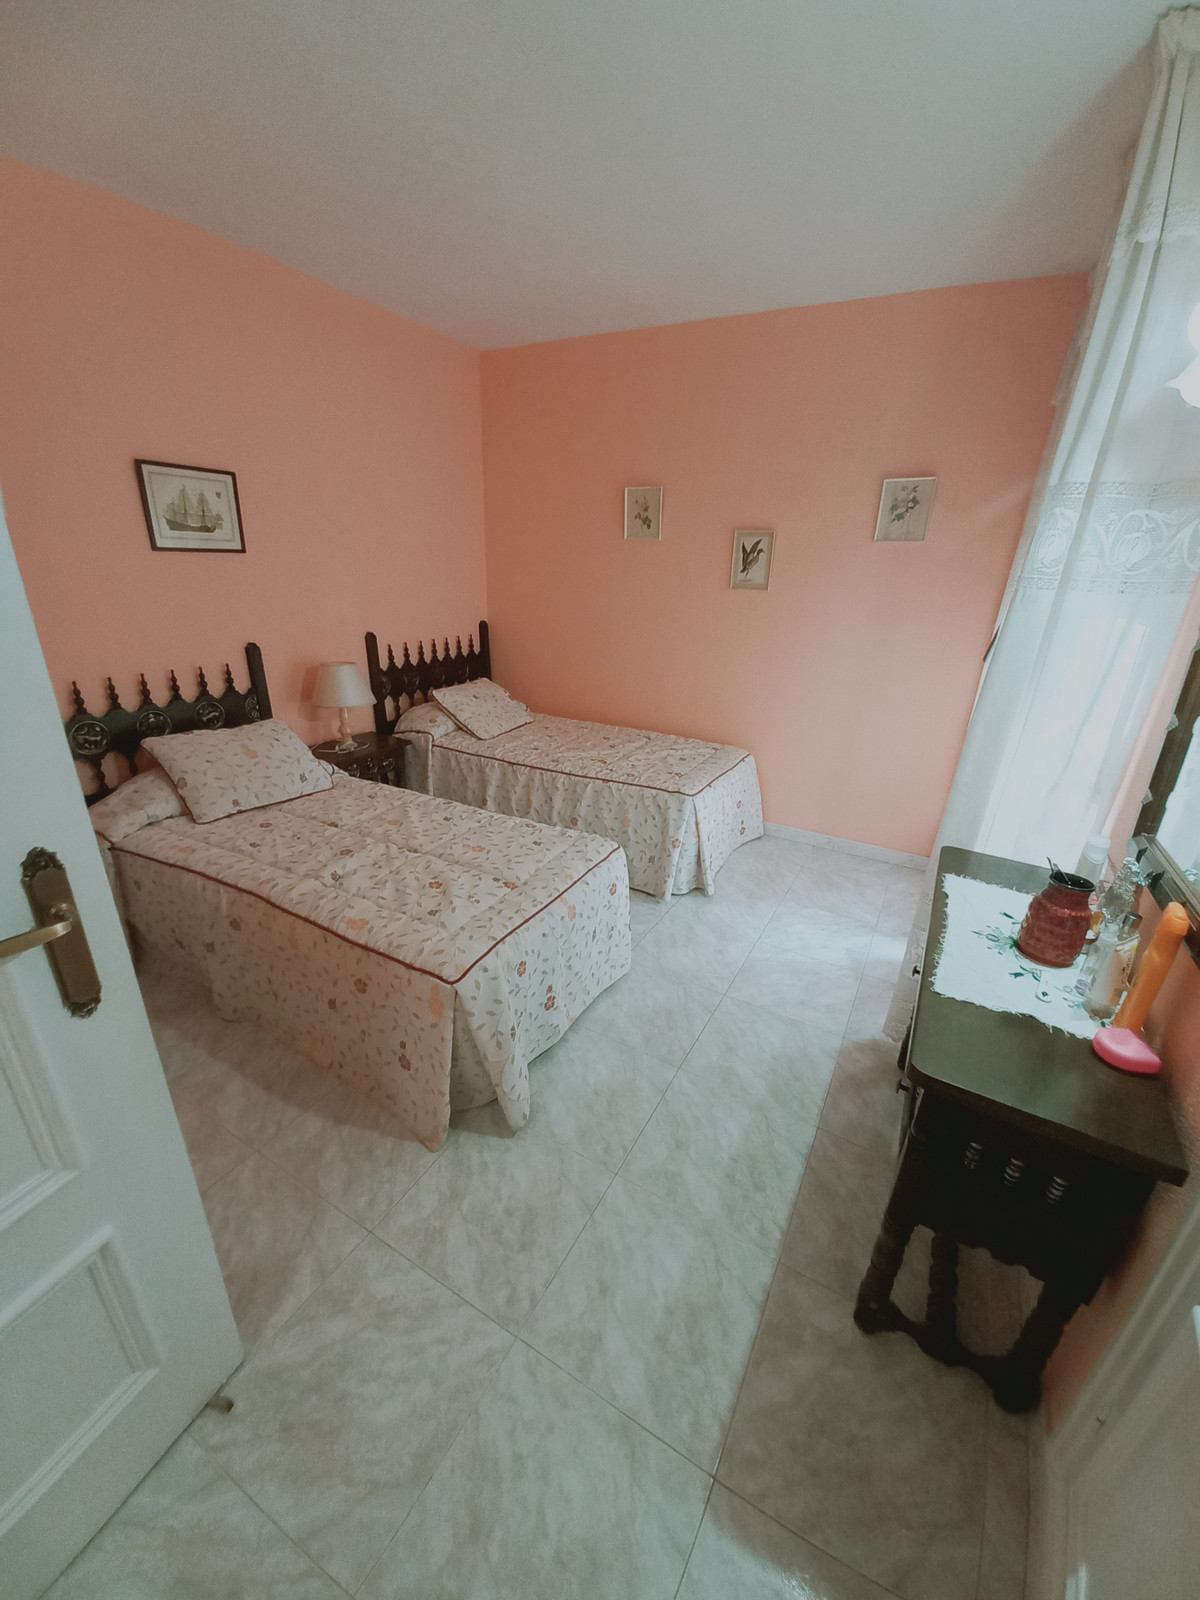 2 bedroom Apartment For Sale in La Campana, Málaga - thumb 8